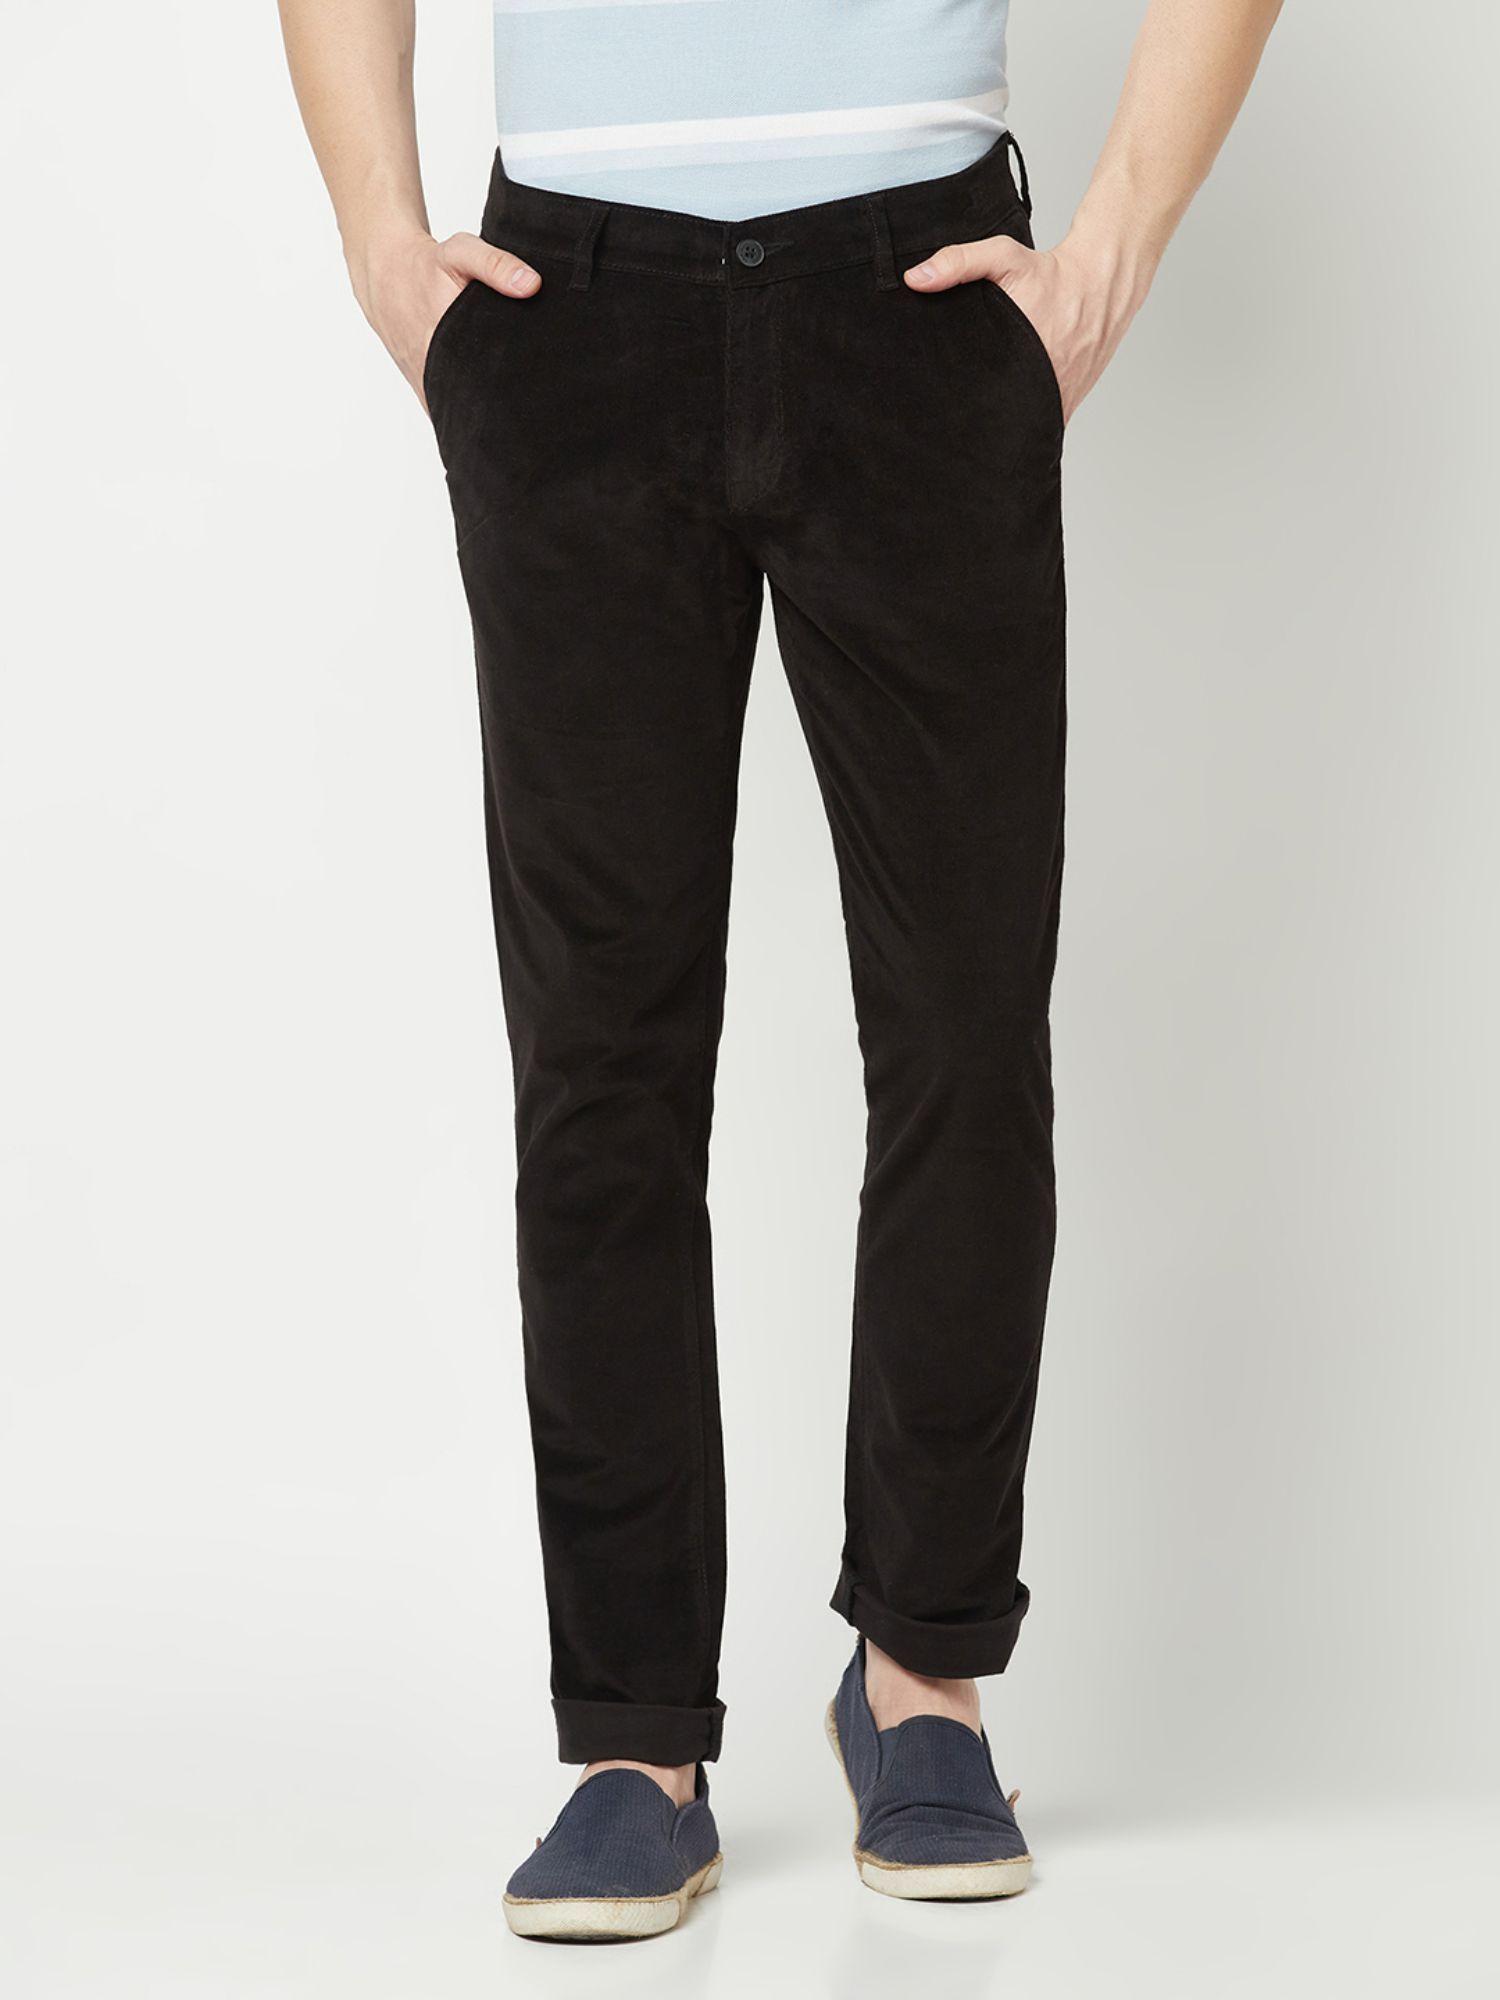 mens-black-corduroy-trousers